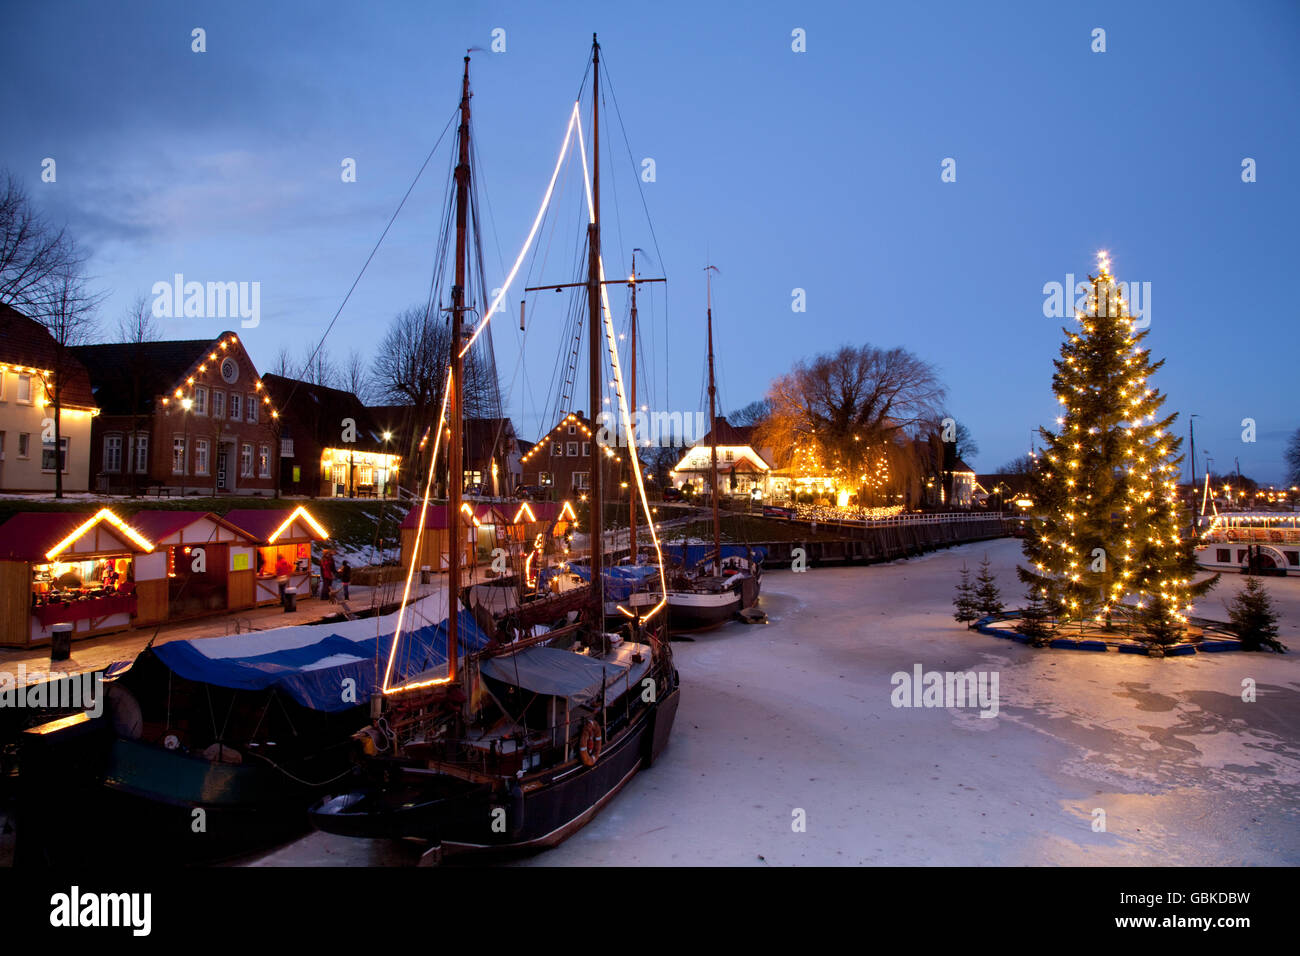 Museumshafen, museum harbour, with Christmas lights, North Sea resort of Carolinensiel, Wittmund region, North Sea, East Frisia Stock Photo